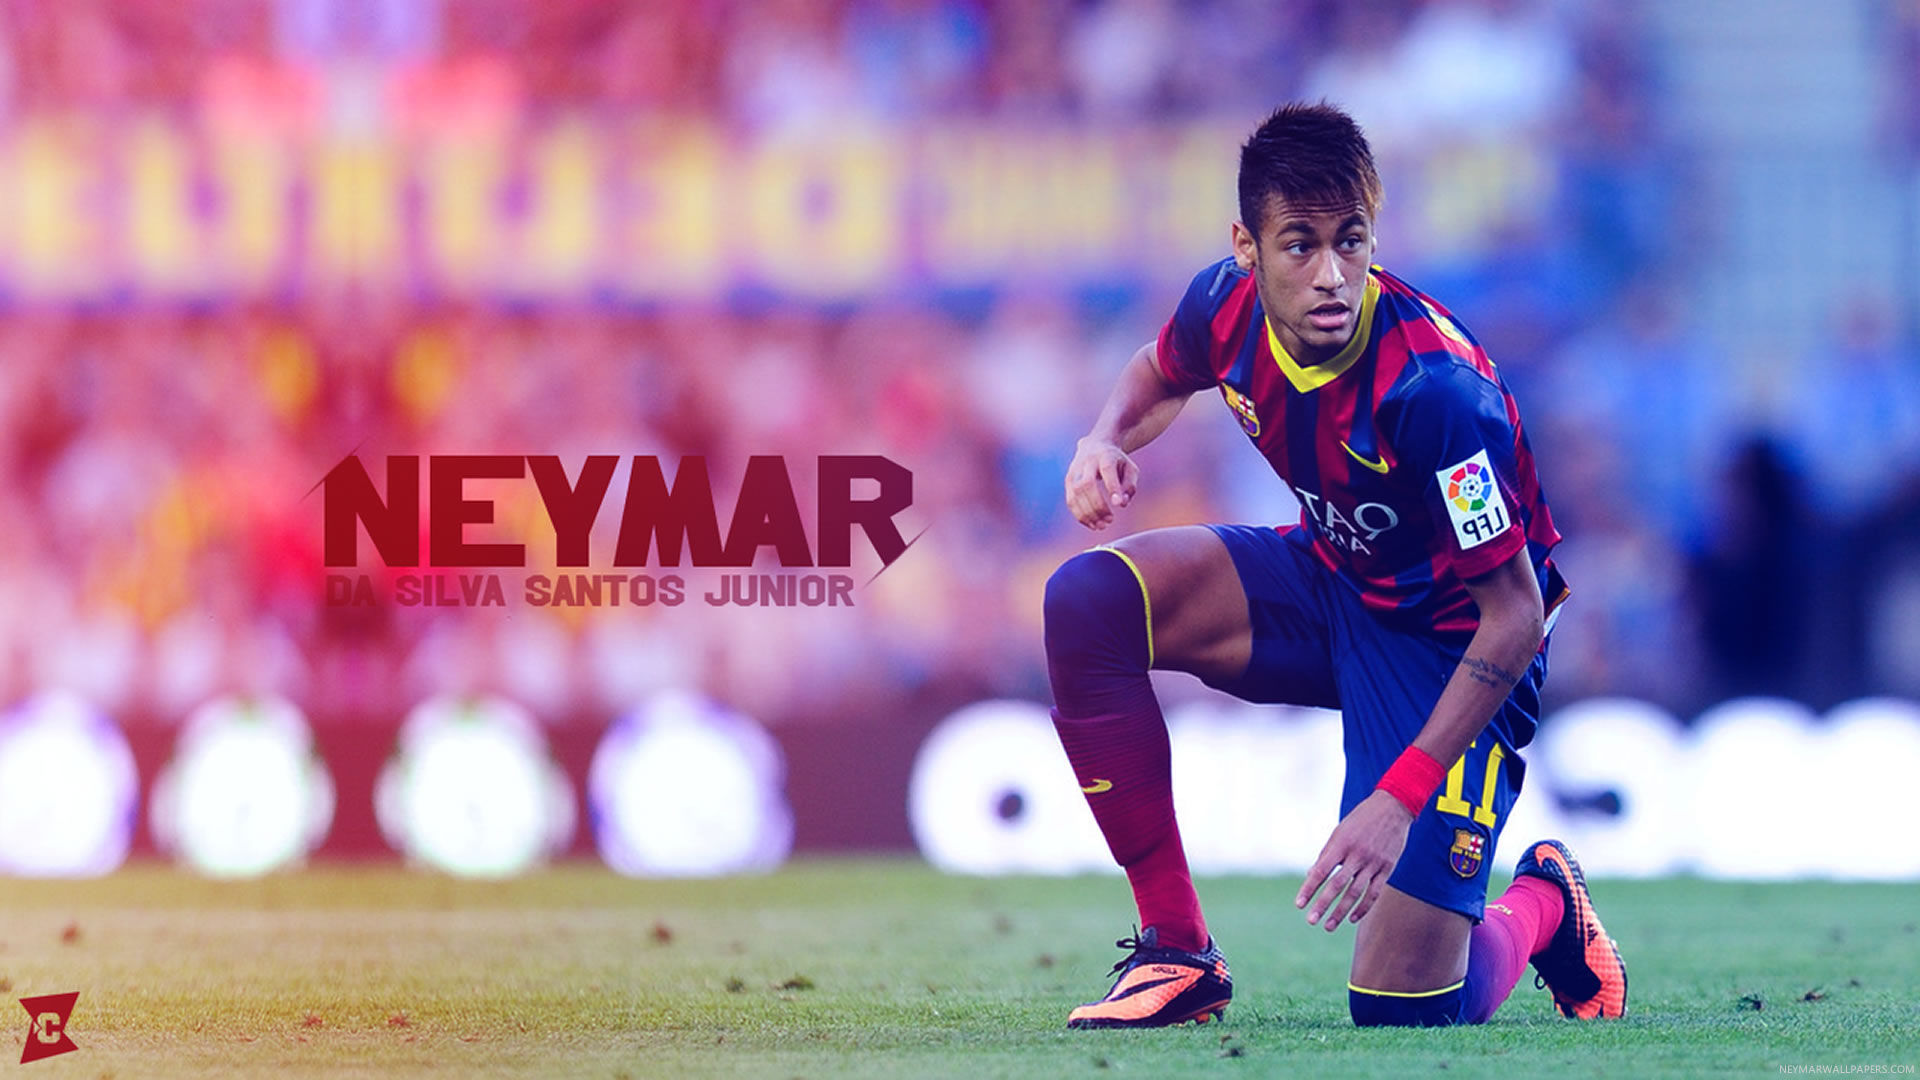 Neymar Wallpaper By Barooo123